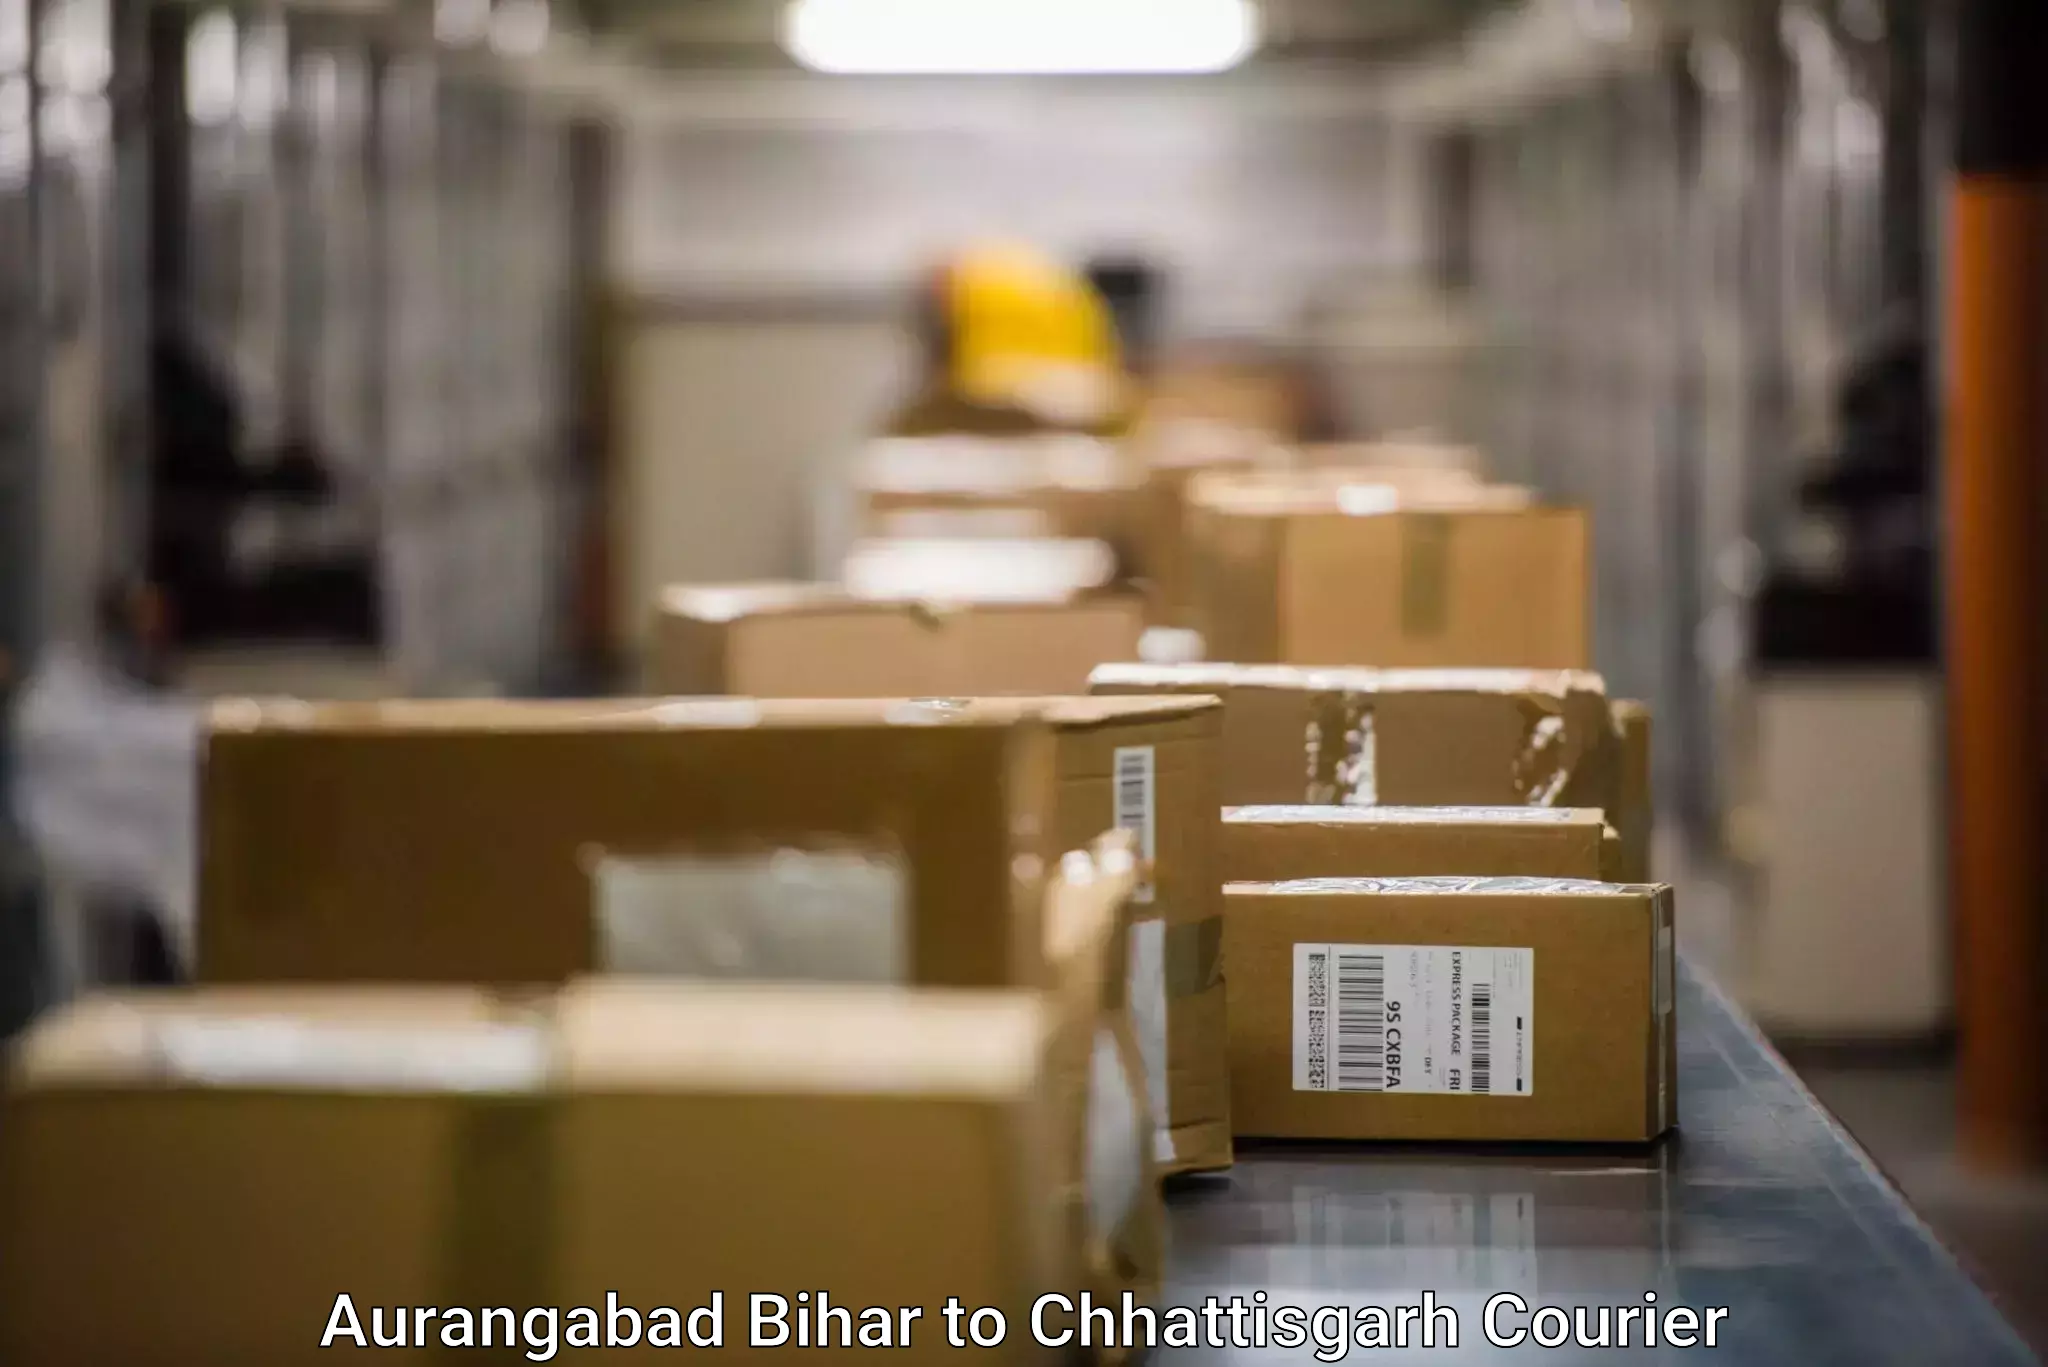 Efficient order fulfillment Aurangabad Bihar to Basna